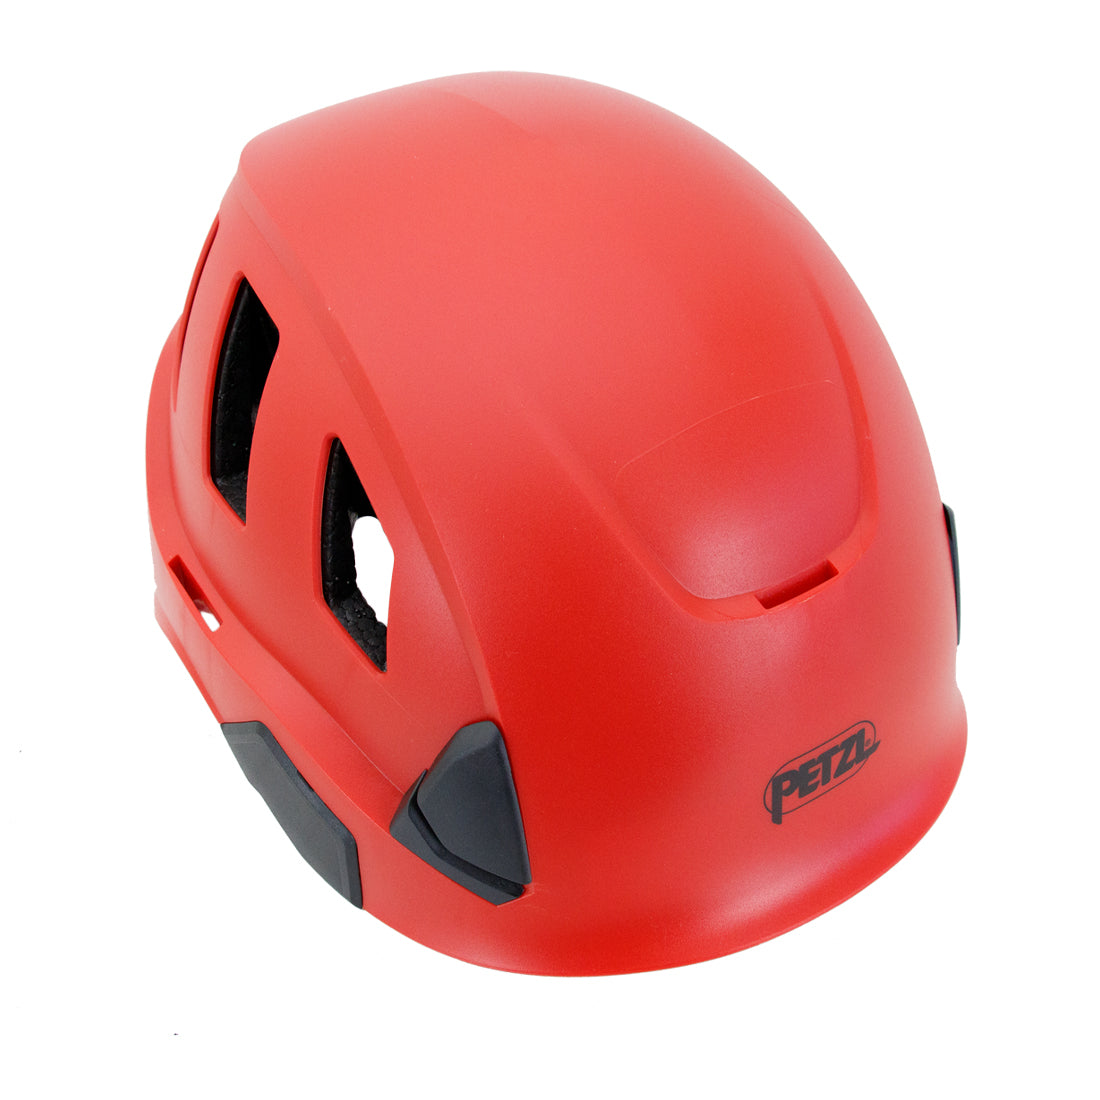 Petzl Strato Vent Helmet - Red Top View